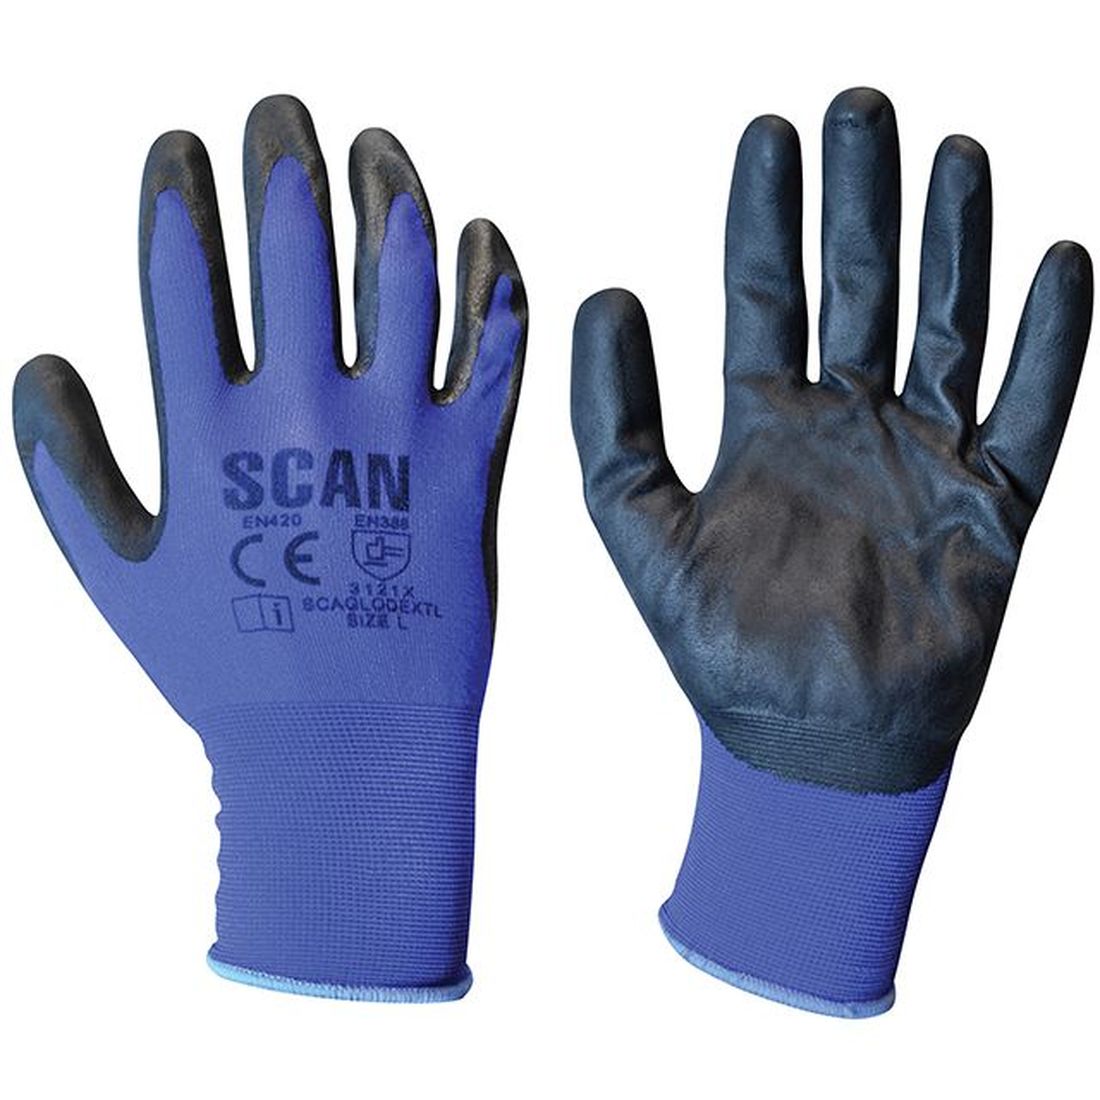 Scan Max - Dexterity Nitrile Gloves - L (Size 9)                                     